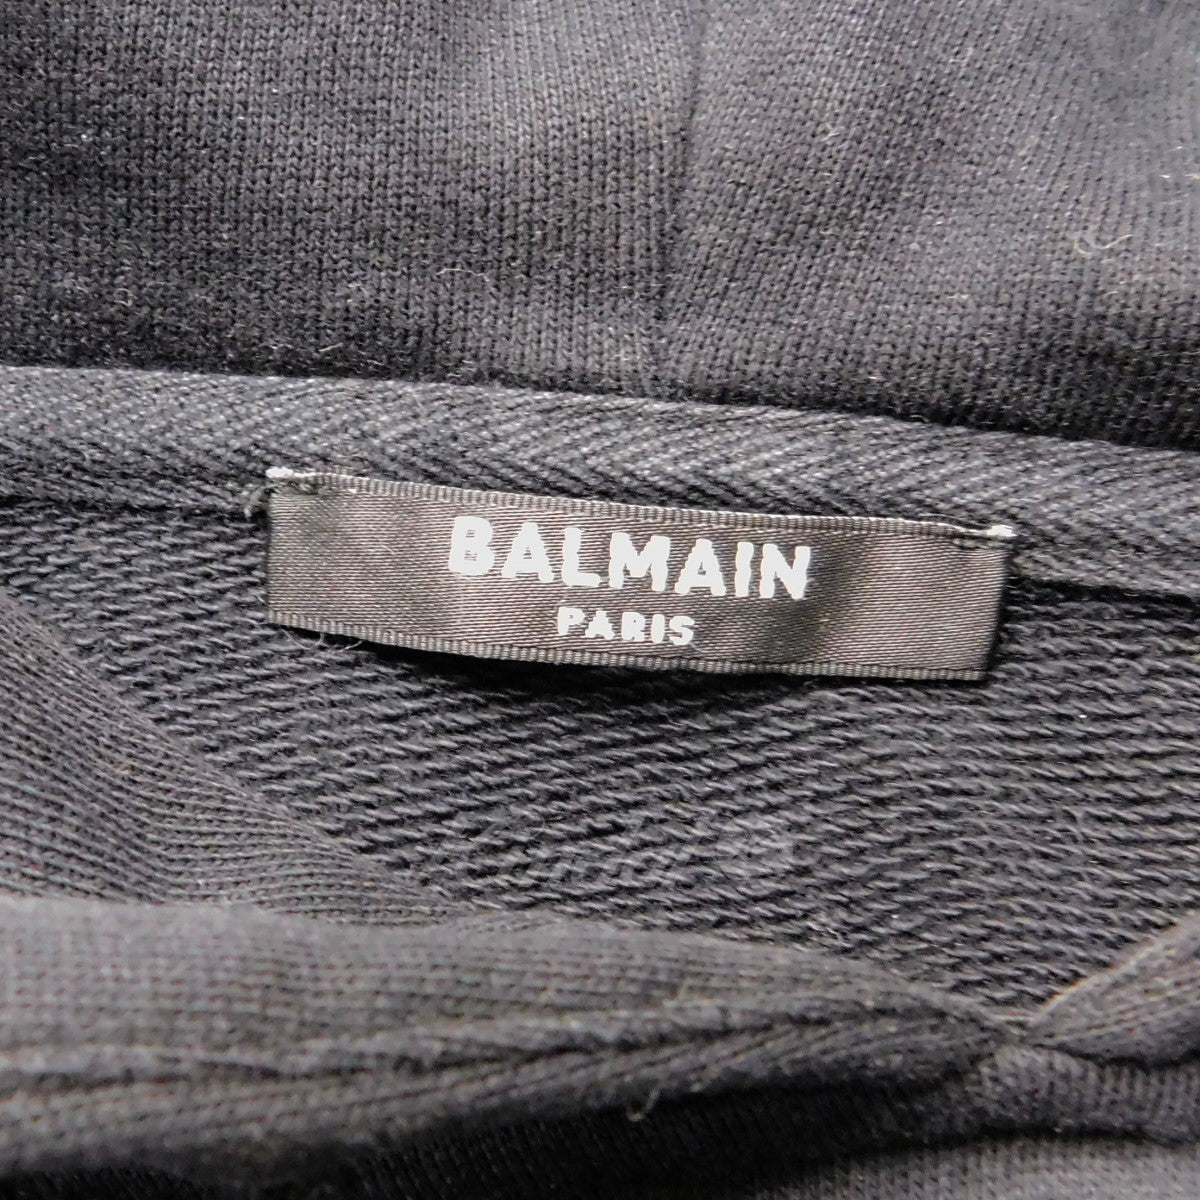 BALMAIN(バルマン) サイドジップ レインボーロゴパーカー